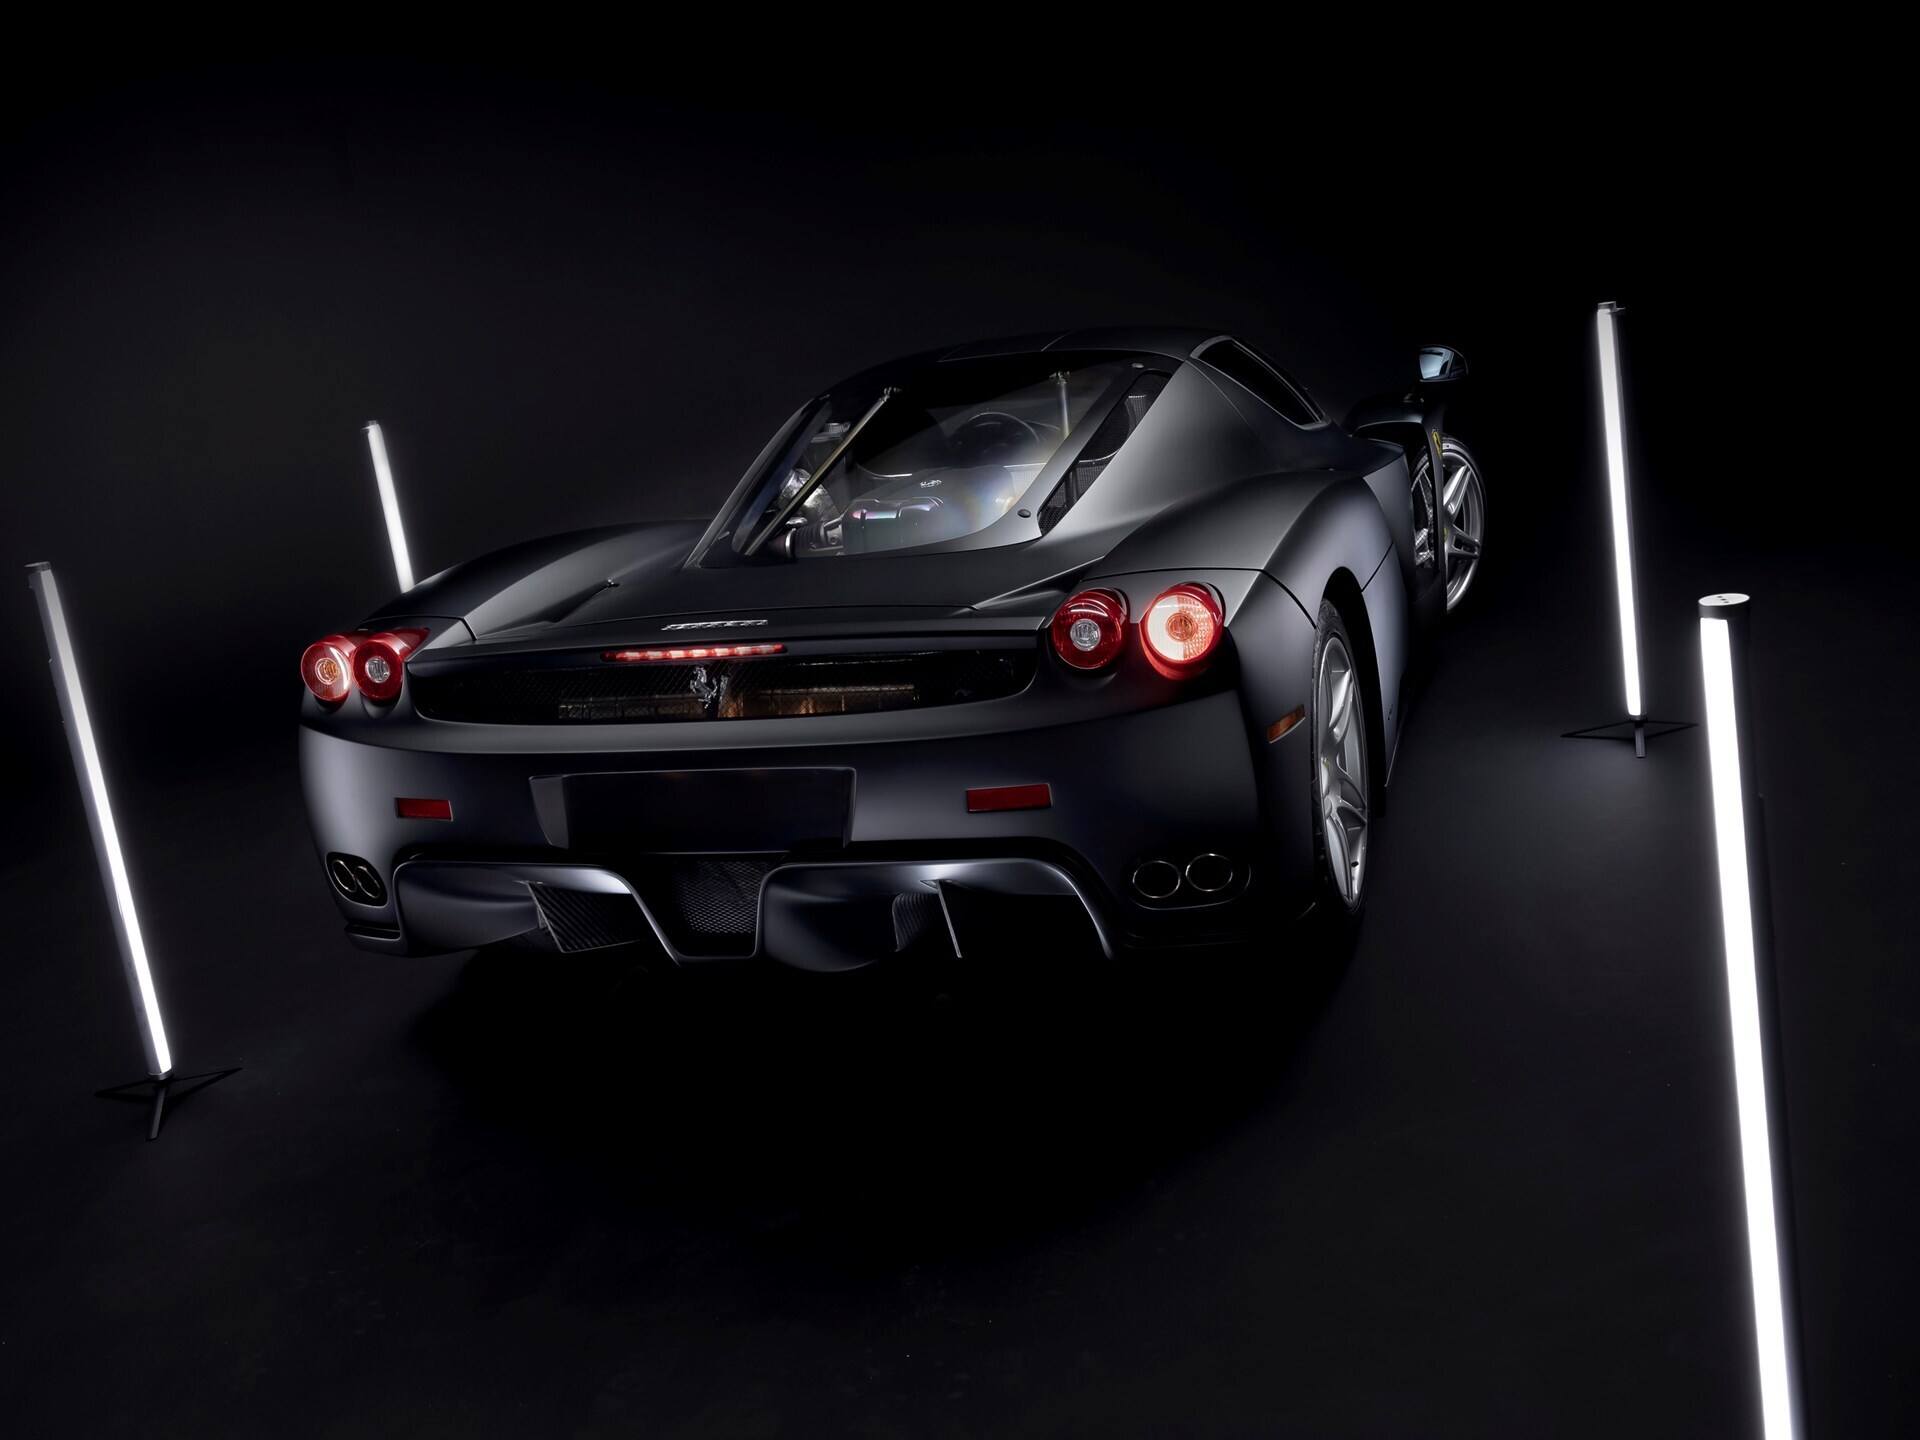 imagen 16 de Sale a subasta un Ferrari Enzo negro mate único excepcional.